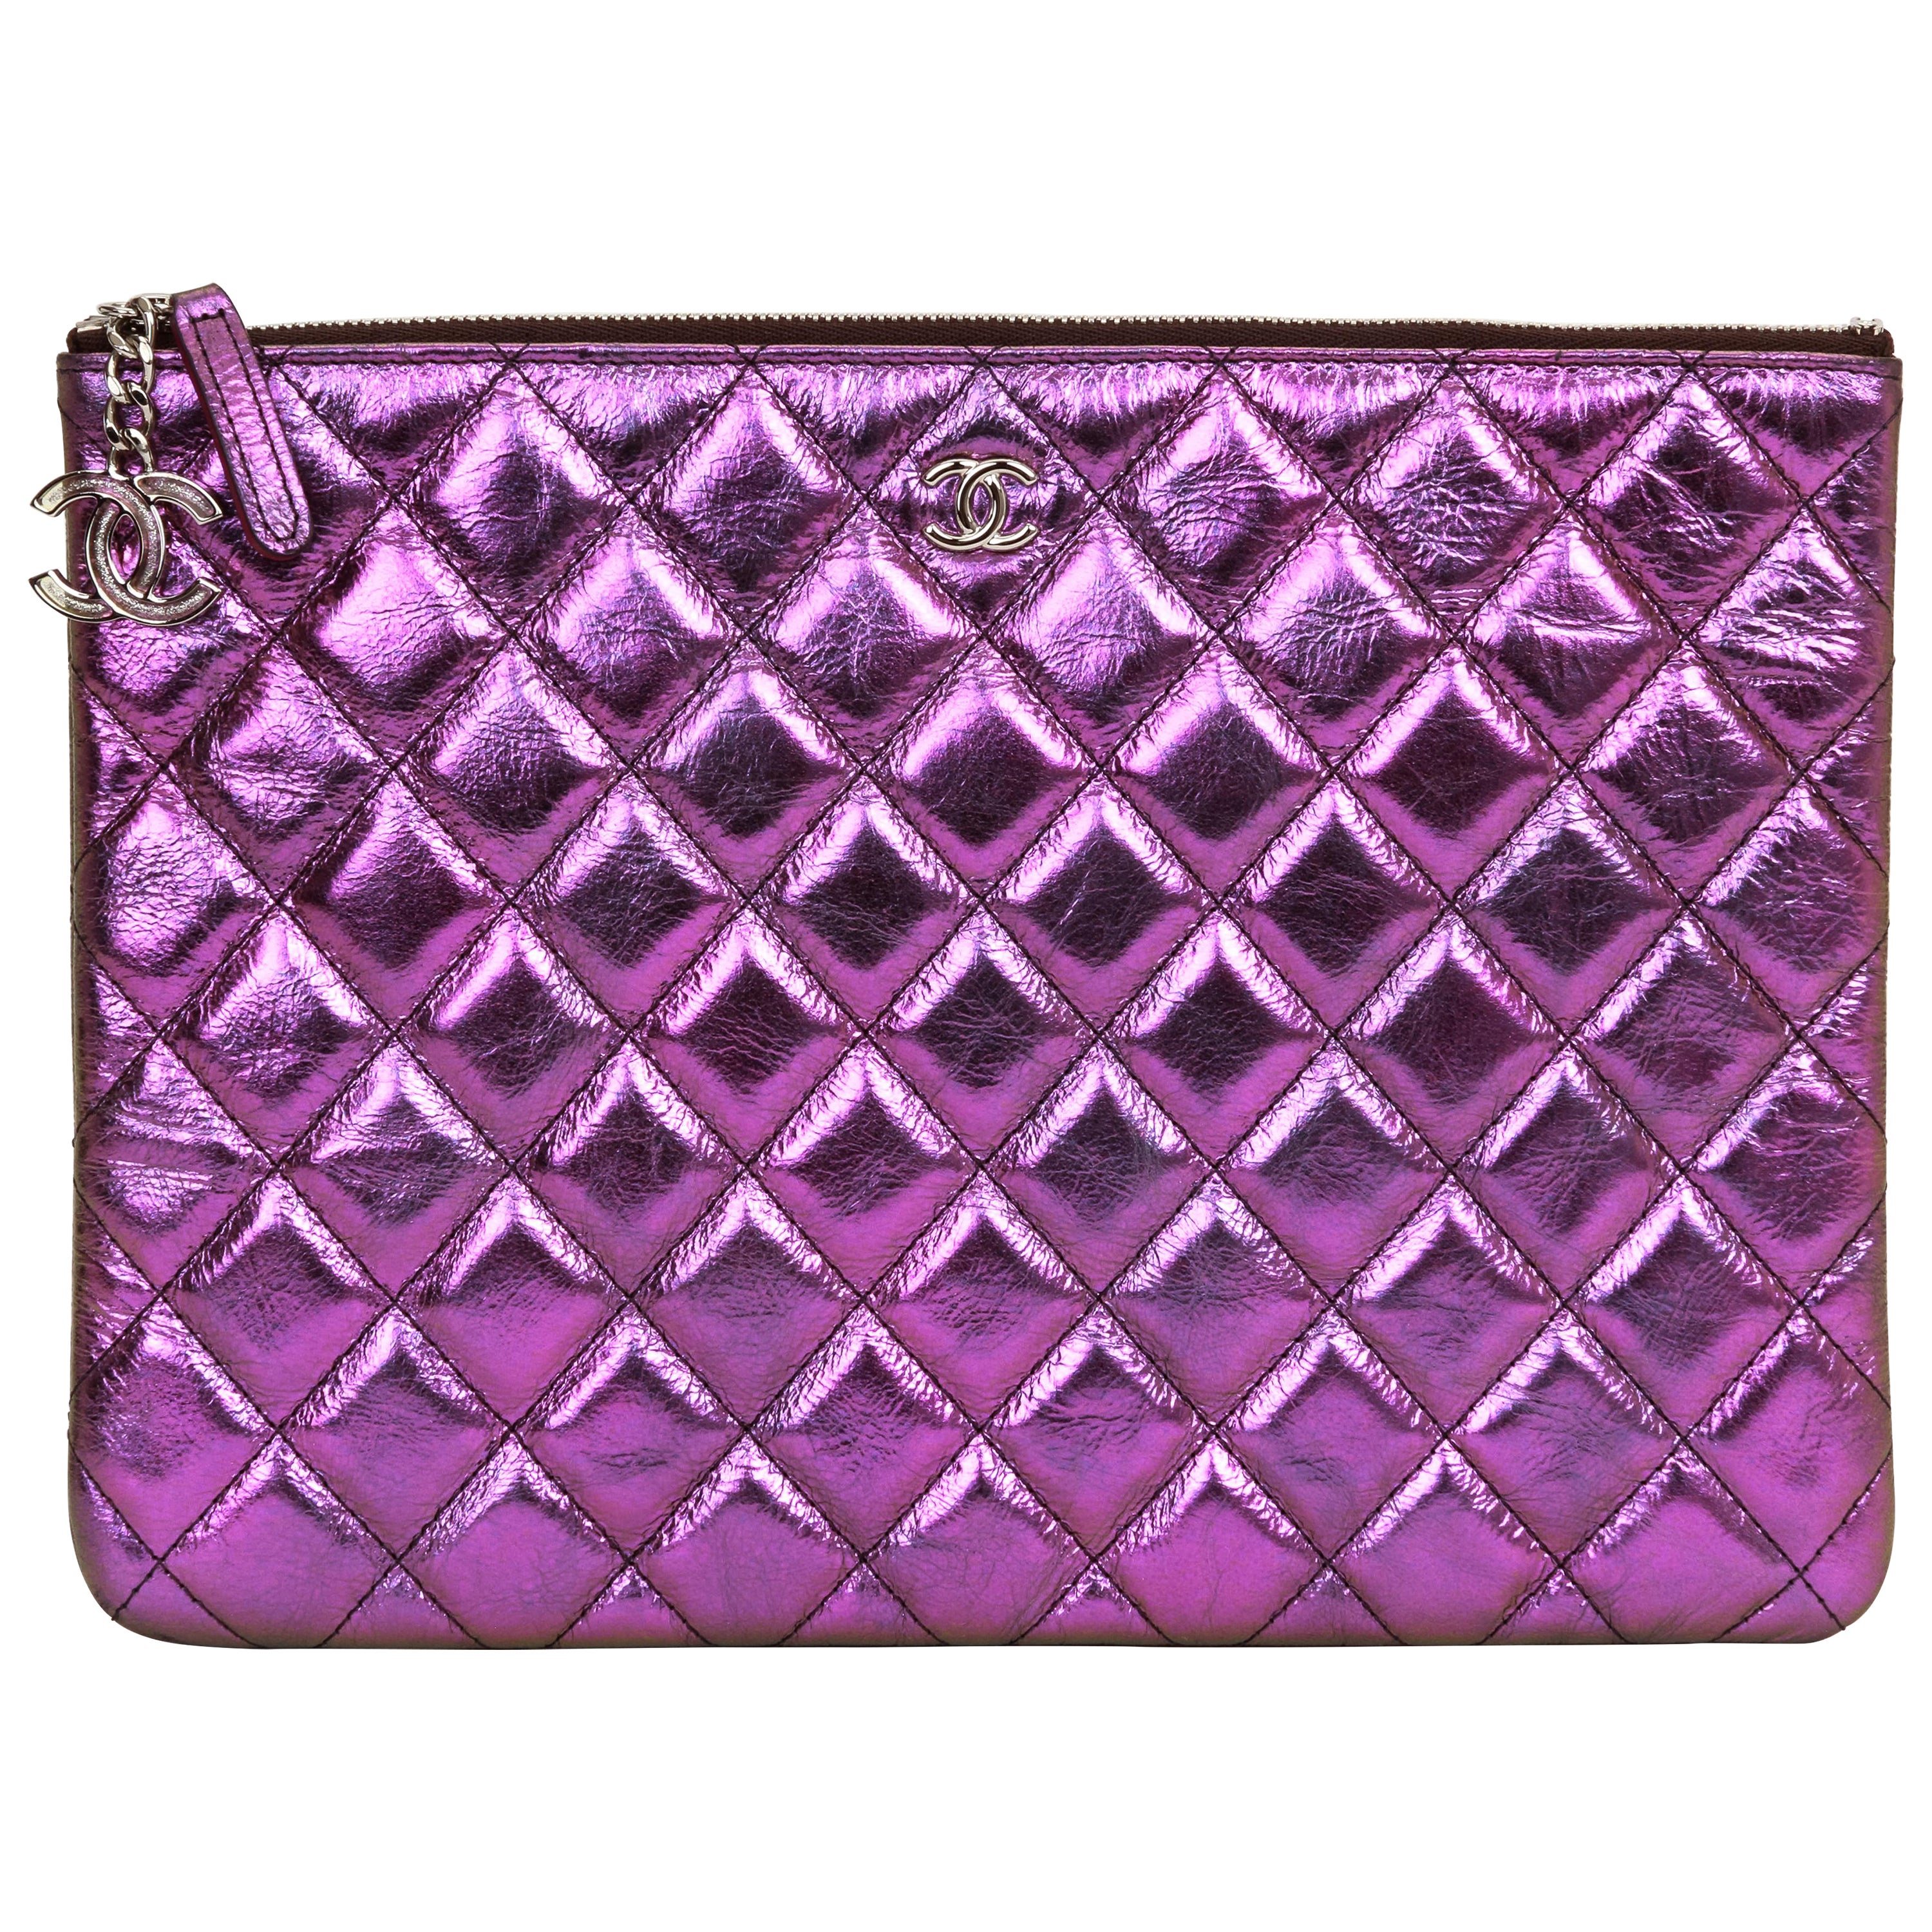 New Chanel Purple Metallic Clutch Bag